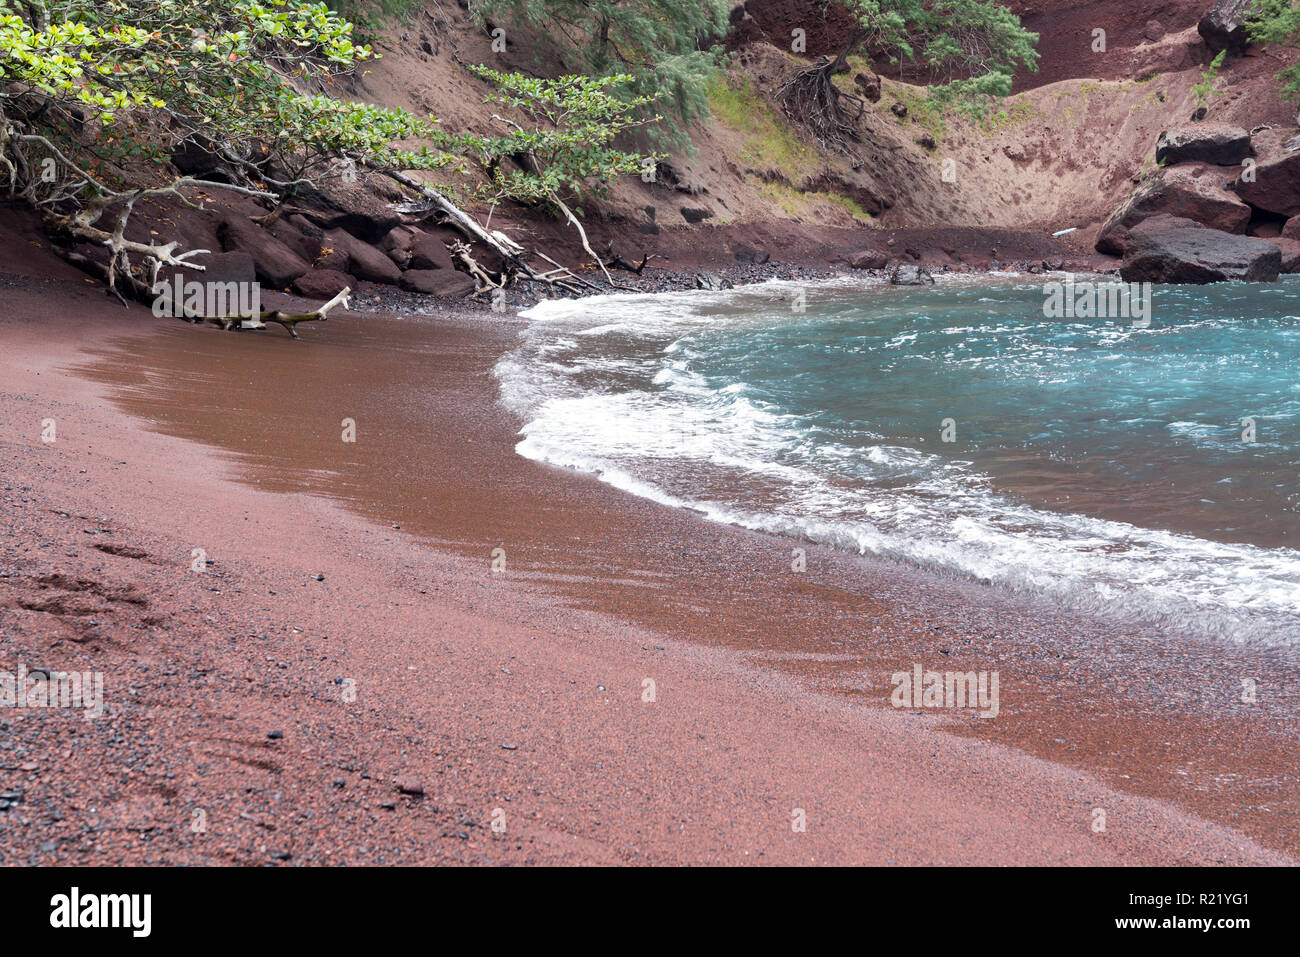 La spiaggia di sabbia rossa di Maui, Hawaii - aka Kaihalulu Bay Foto Stock